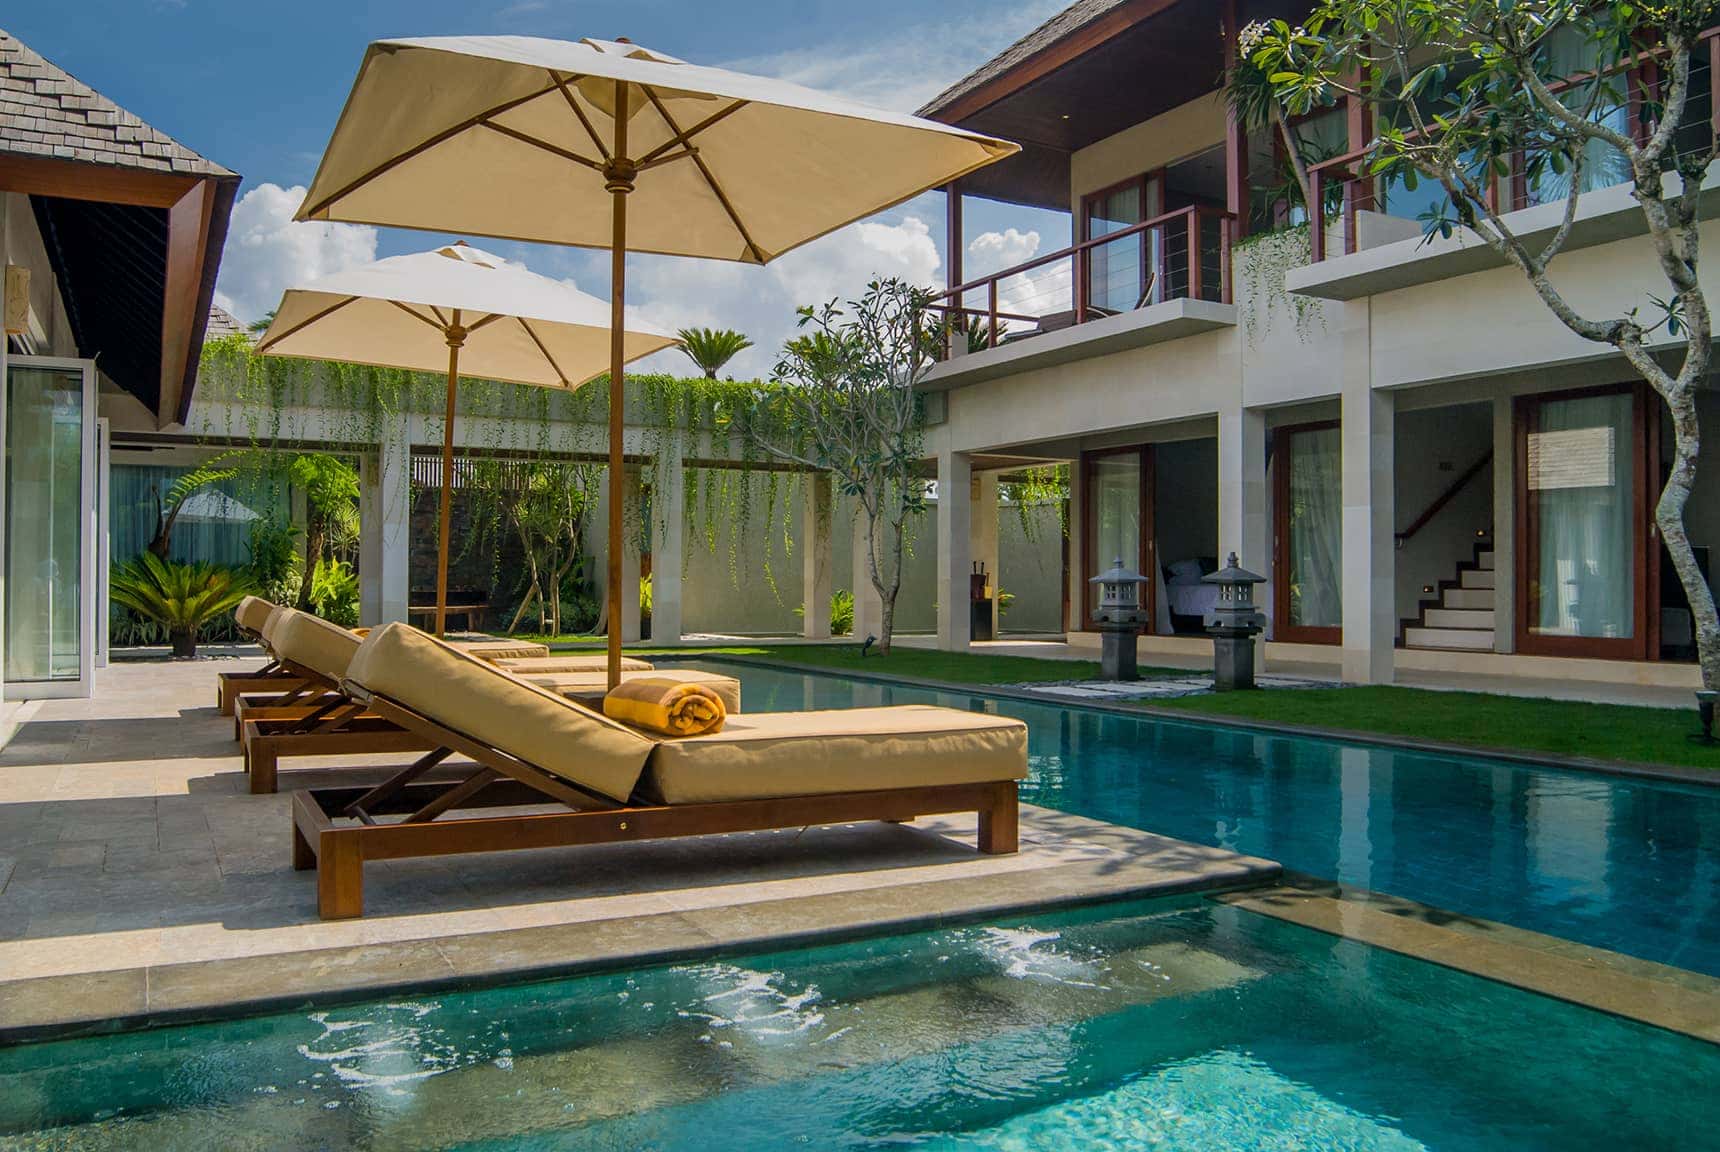 Villa Batu Belig - Seminyak, Bali Indonesia (Bali villa photography by master photographer Rick Carmichael of LuxViz)